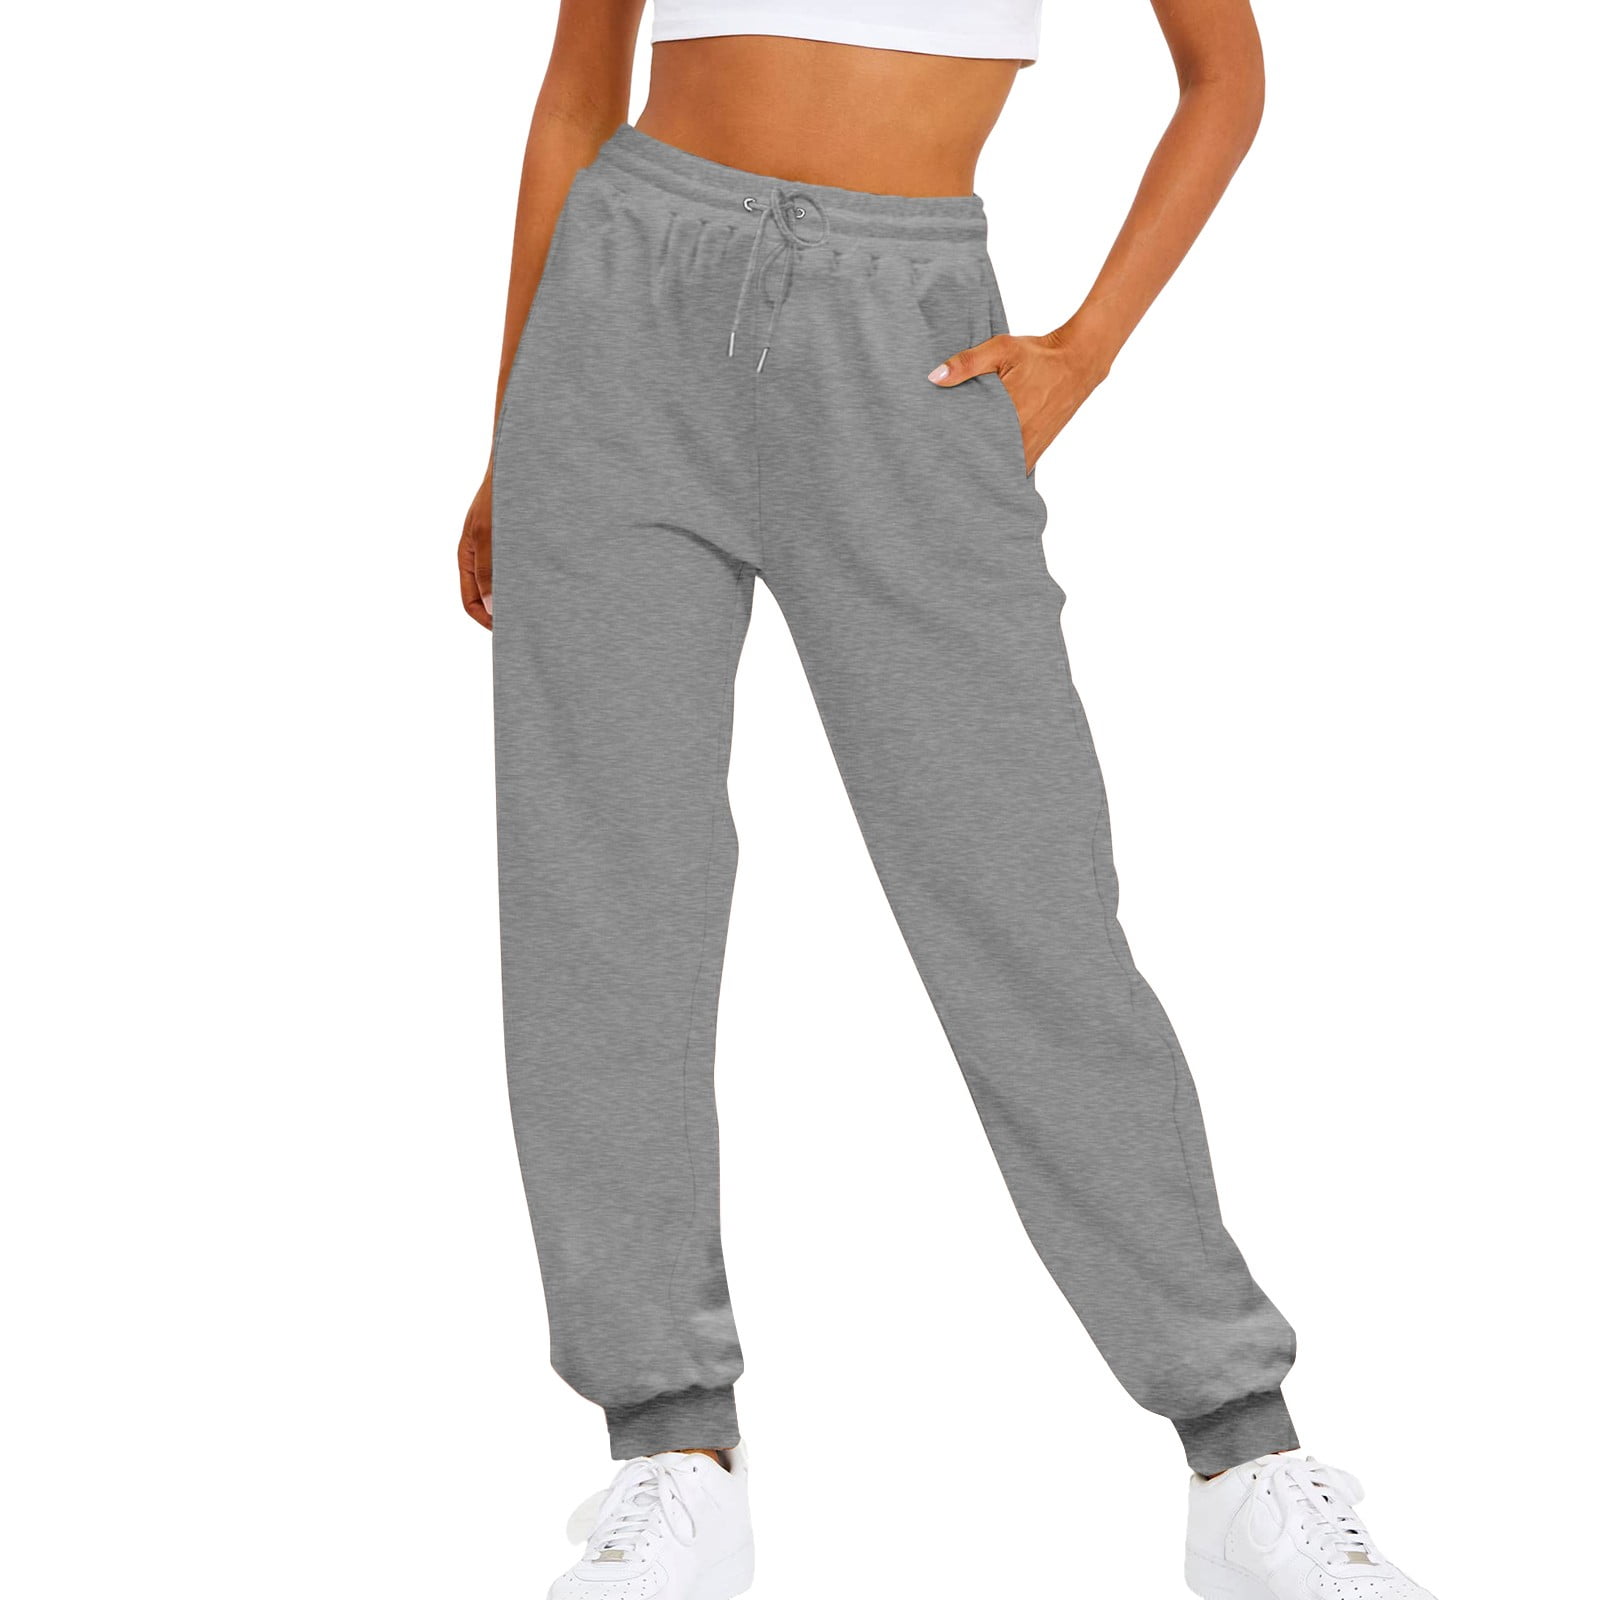 TQWQT Women's Cinch Bottom Sweatpants Pockets High Waist Sporty Gym  Athletic Fit Jogger Pants Lounge Trousers Light Blue L